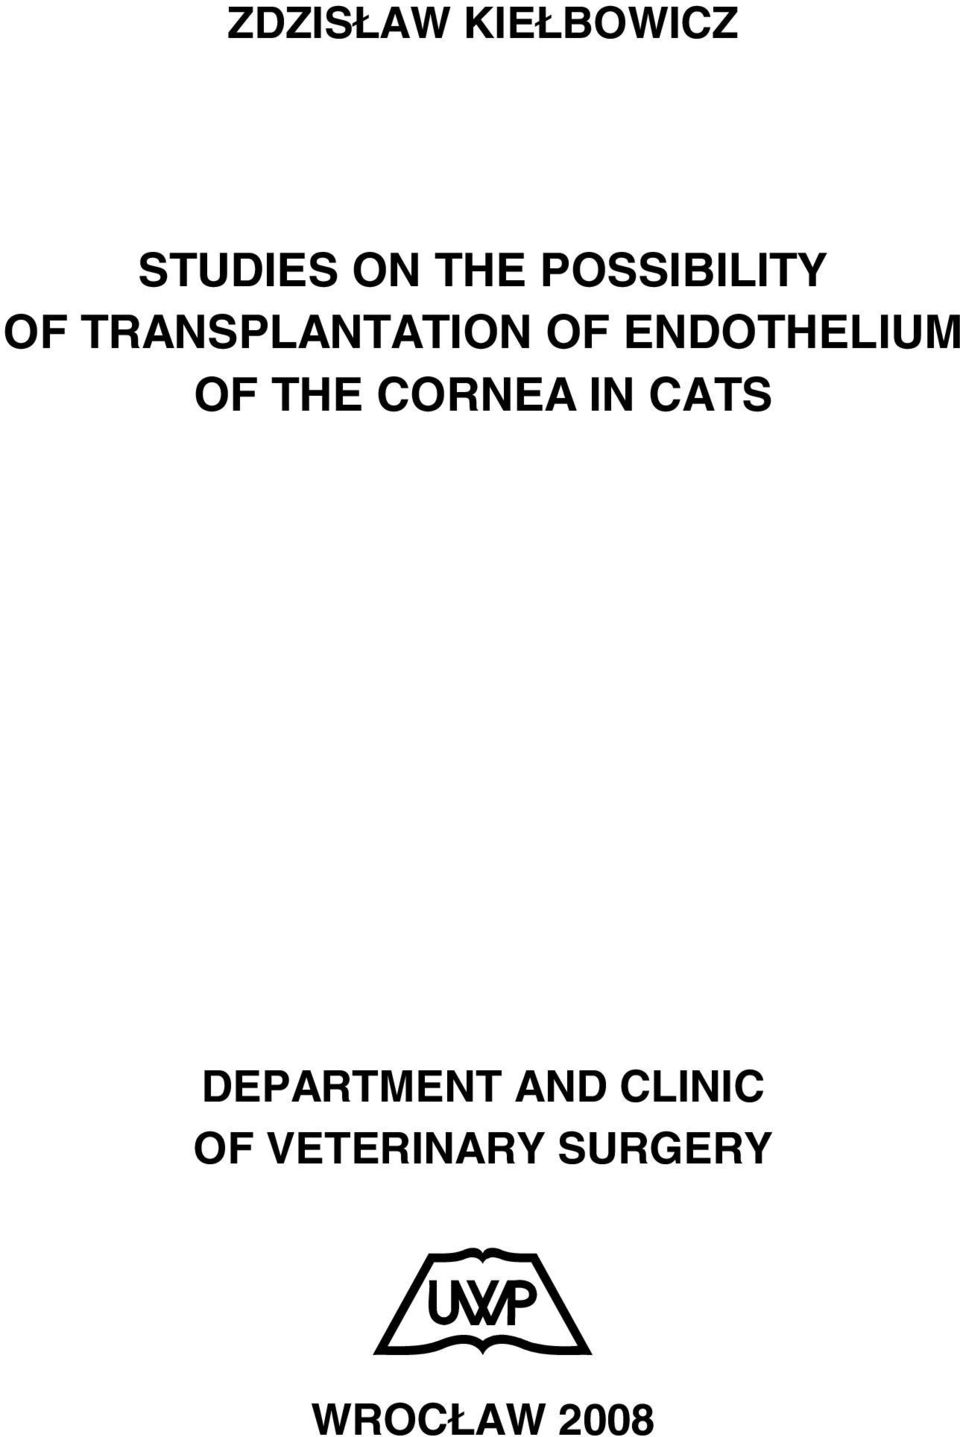 ENDOTHELIUM OF THE CORNEA IN CATS